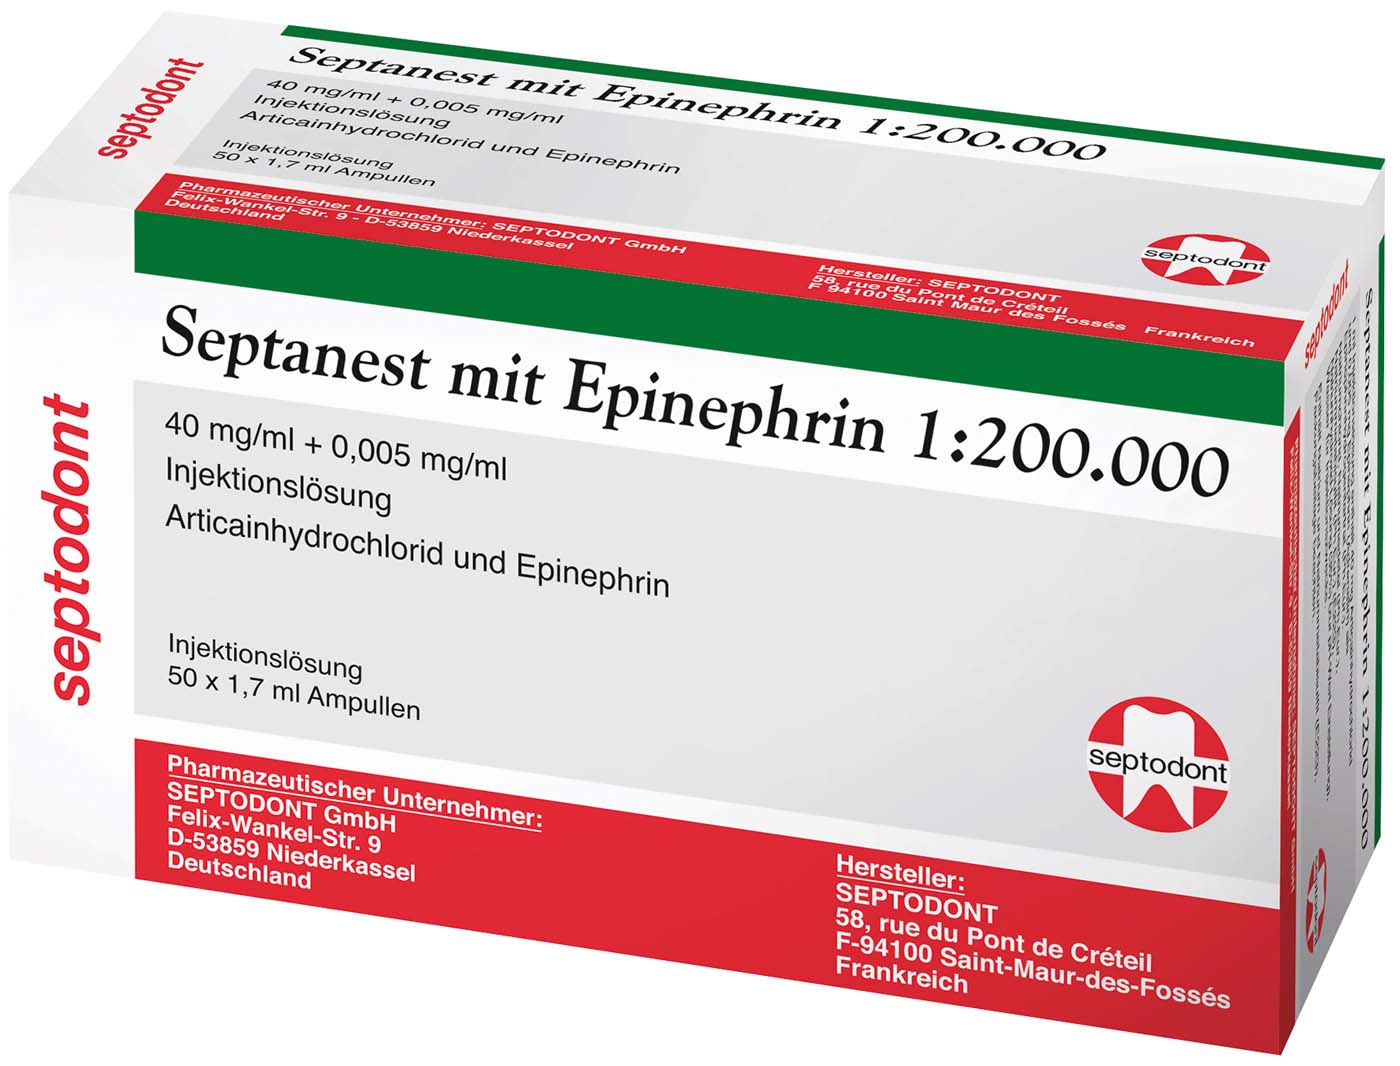 Septanest mit Epinephrin 1:200.000 Septodont